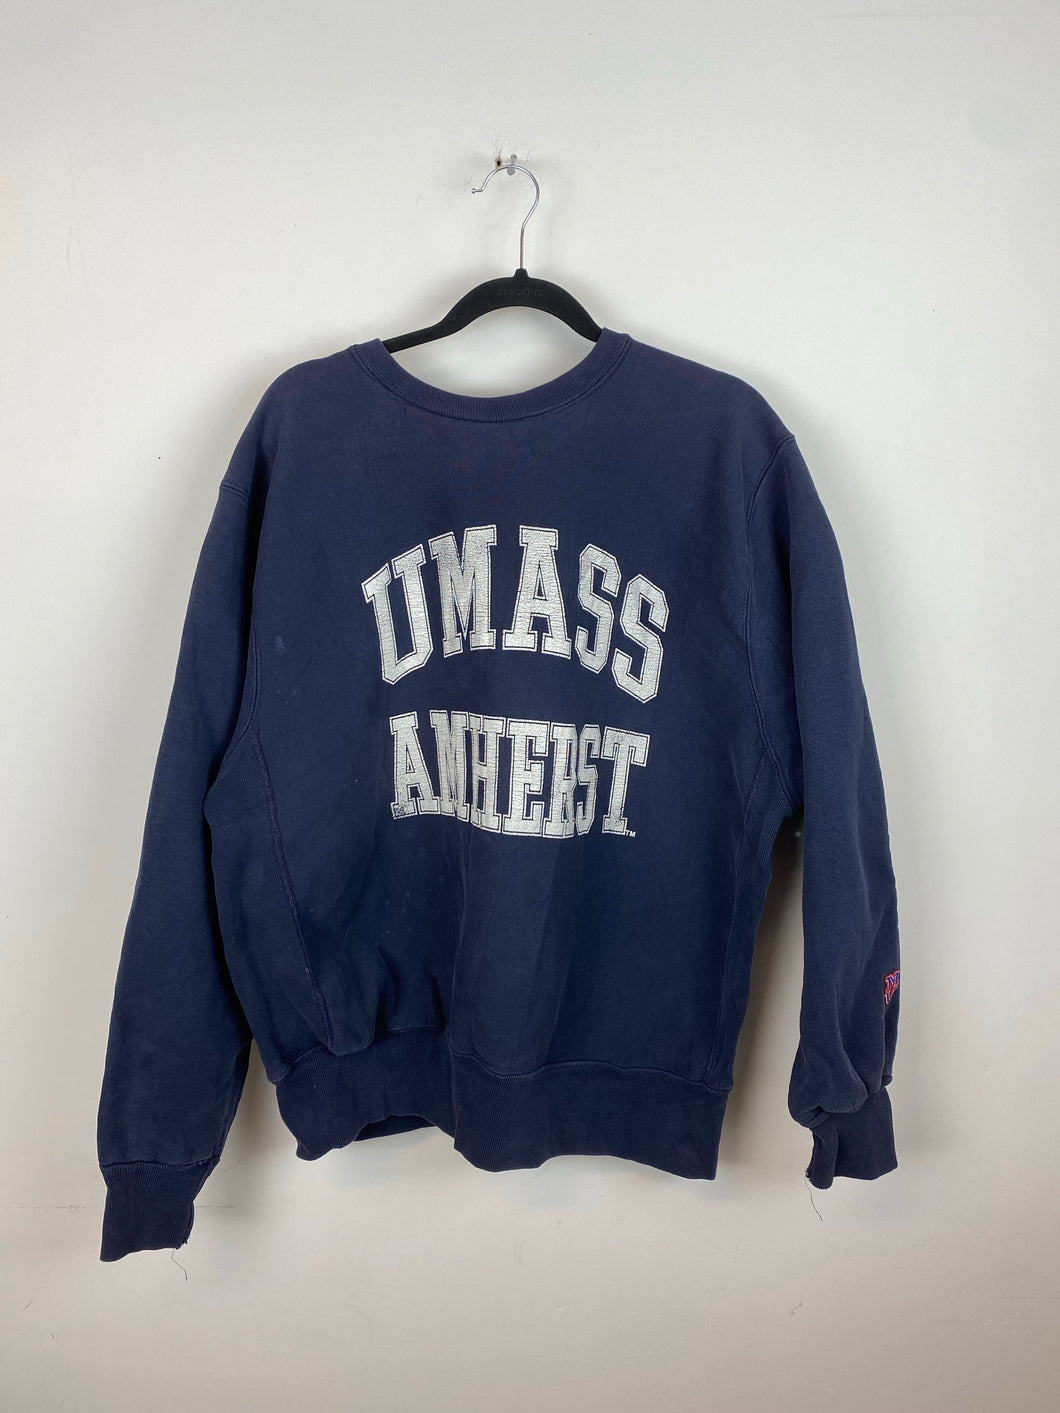 90s Umass Amherst crewneck - S/M